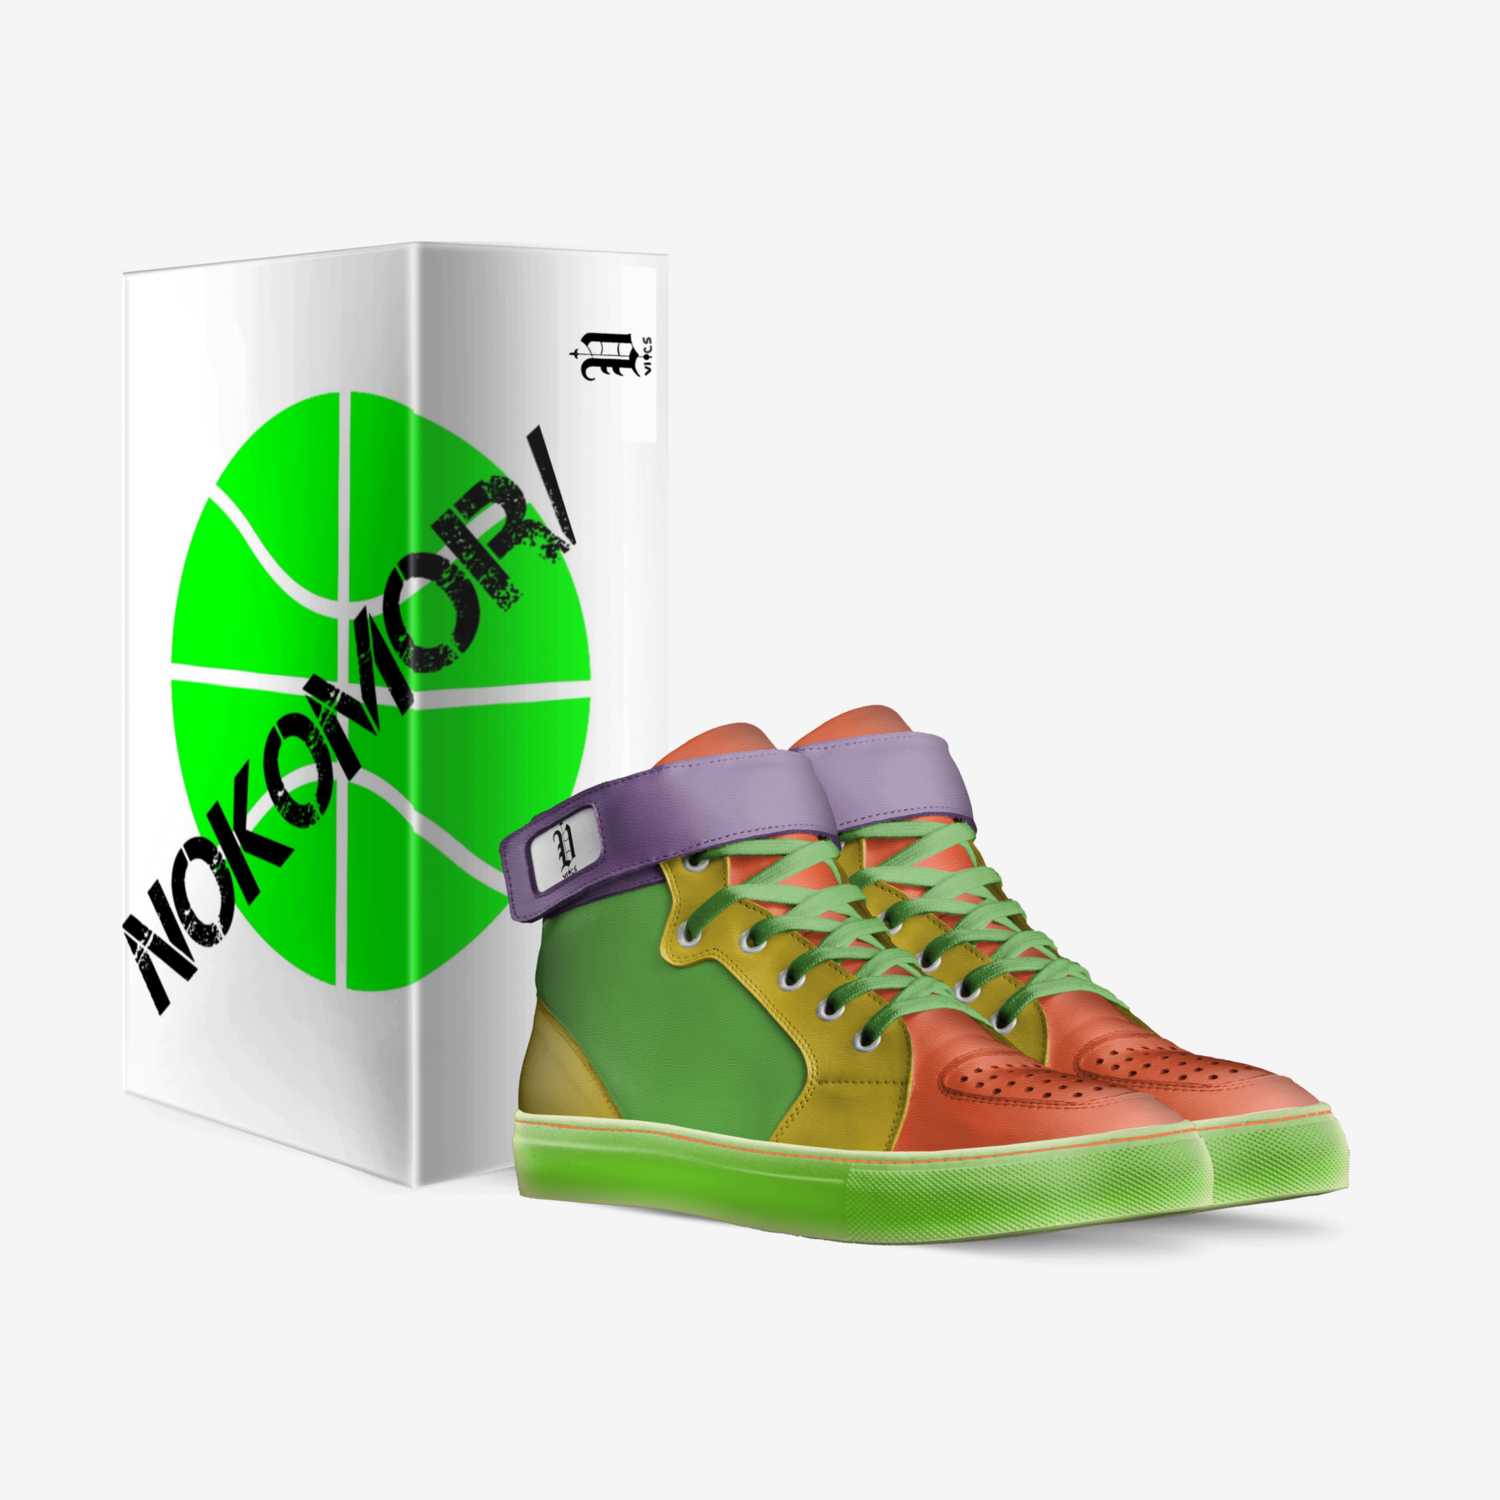 vics nokomora 3 custom made in Italy shoes by Brayden Murphy | Box view